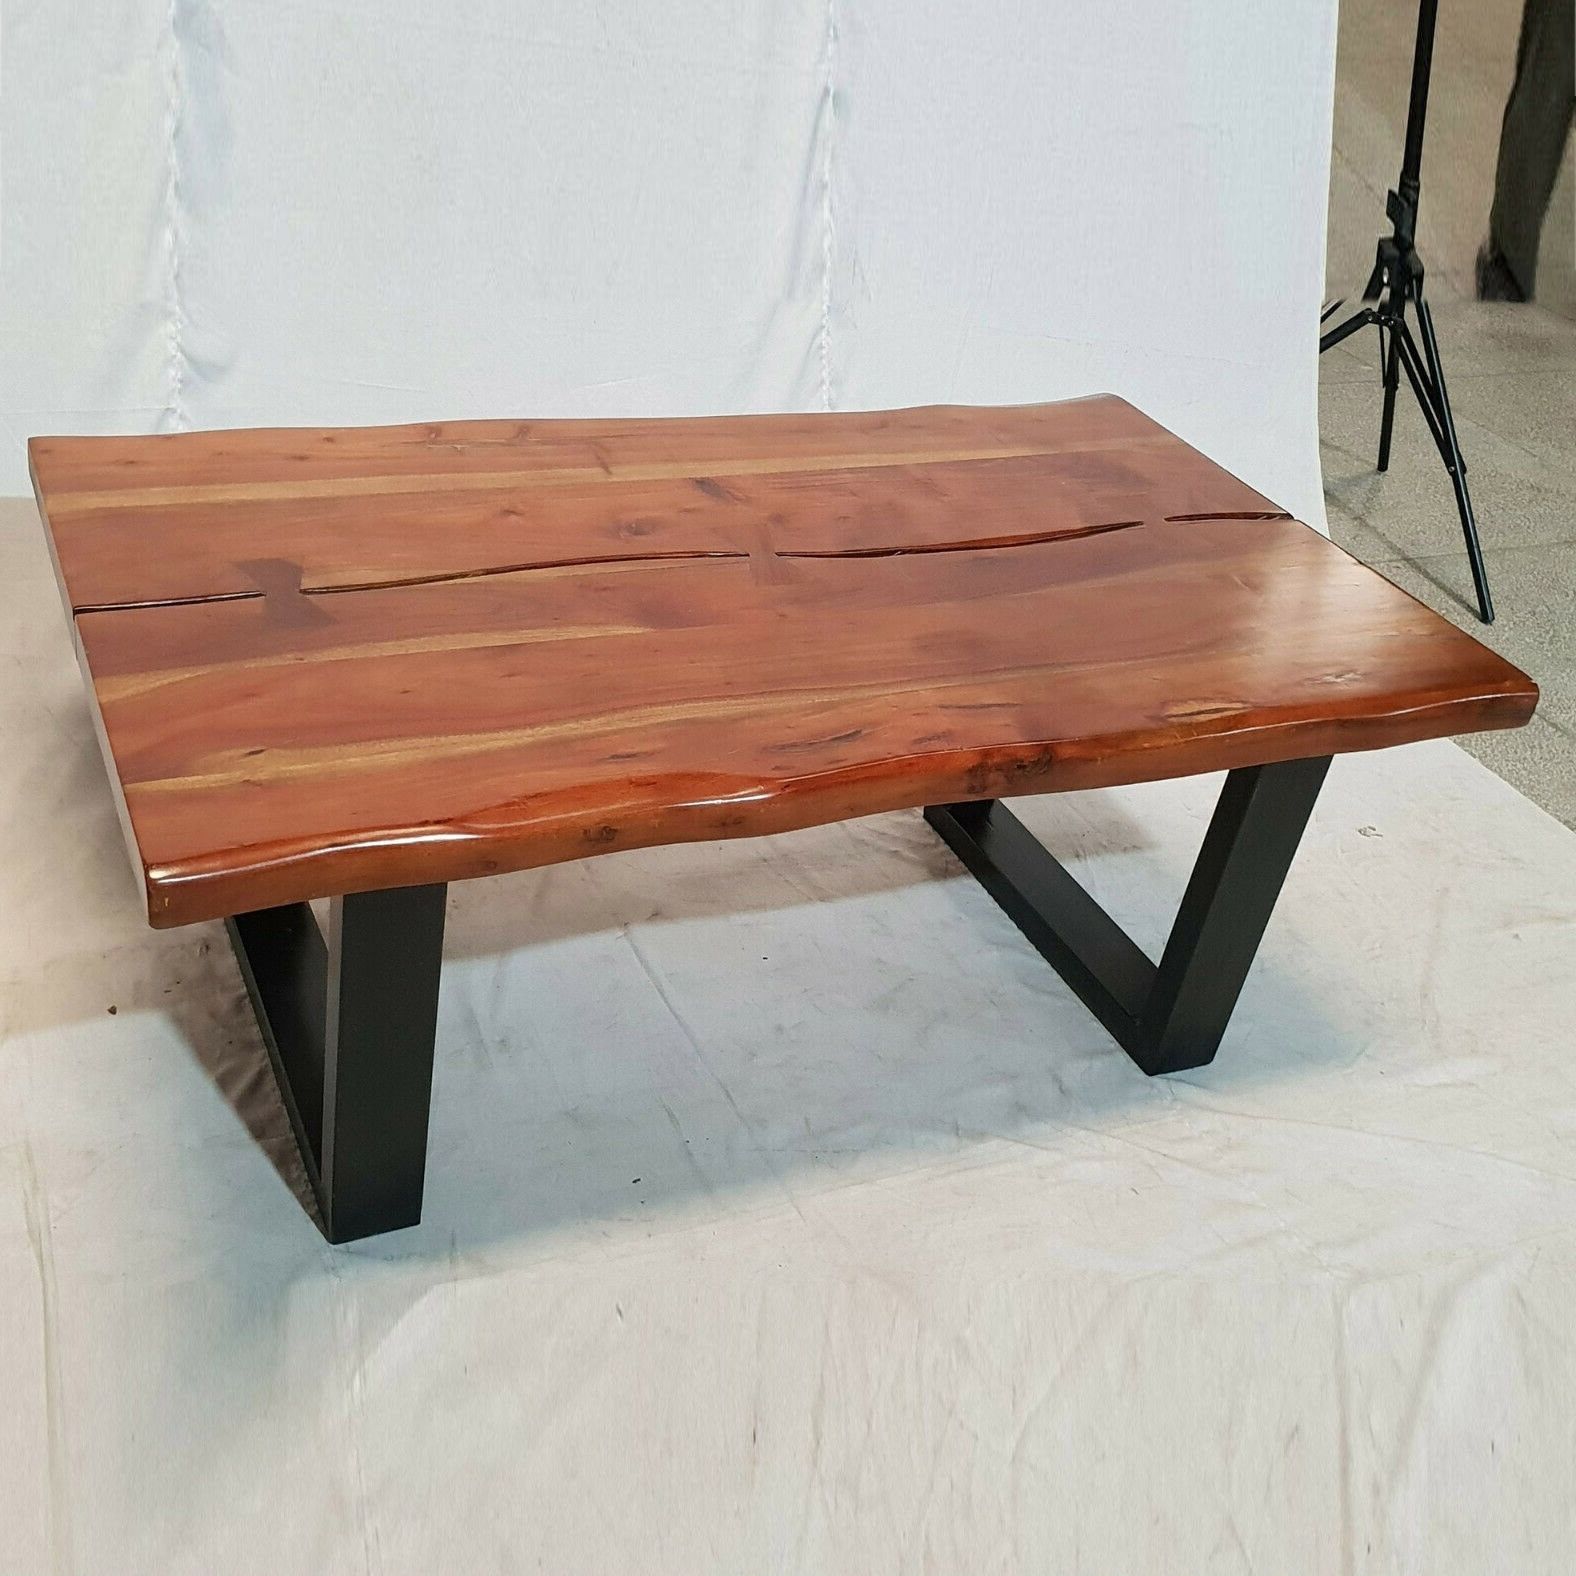 2020 Solid Acacia Wood Coffee Tables Regarding Solid Acacia Wood Live Edge Coffee Table Industrial Metal Legs 122 X 76cm (View 9 of 20)